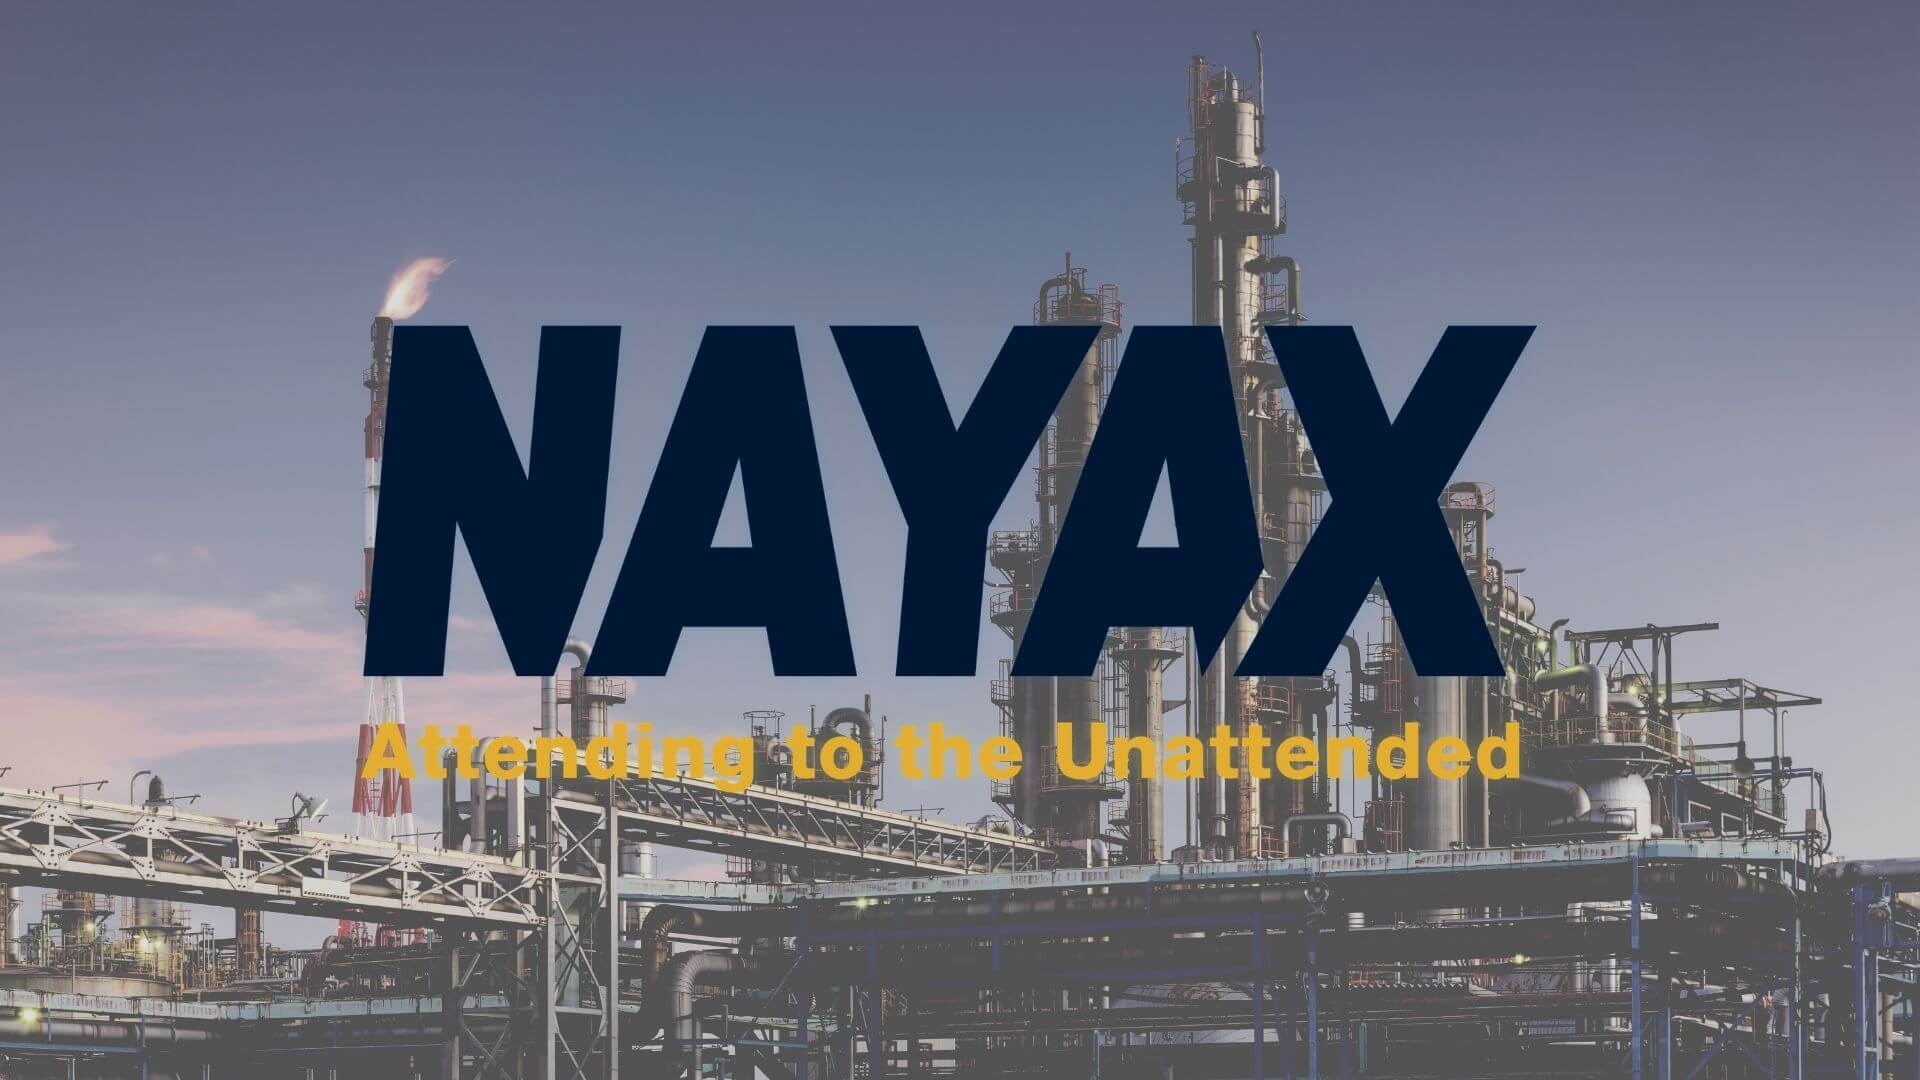 US-based Payment Solution Provider Nayax Raises $60 Million